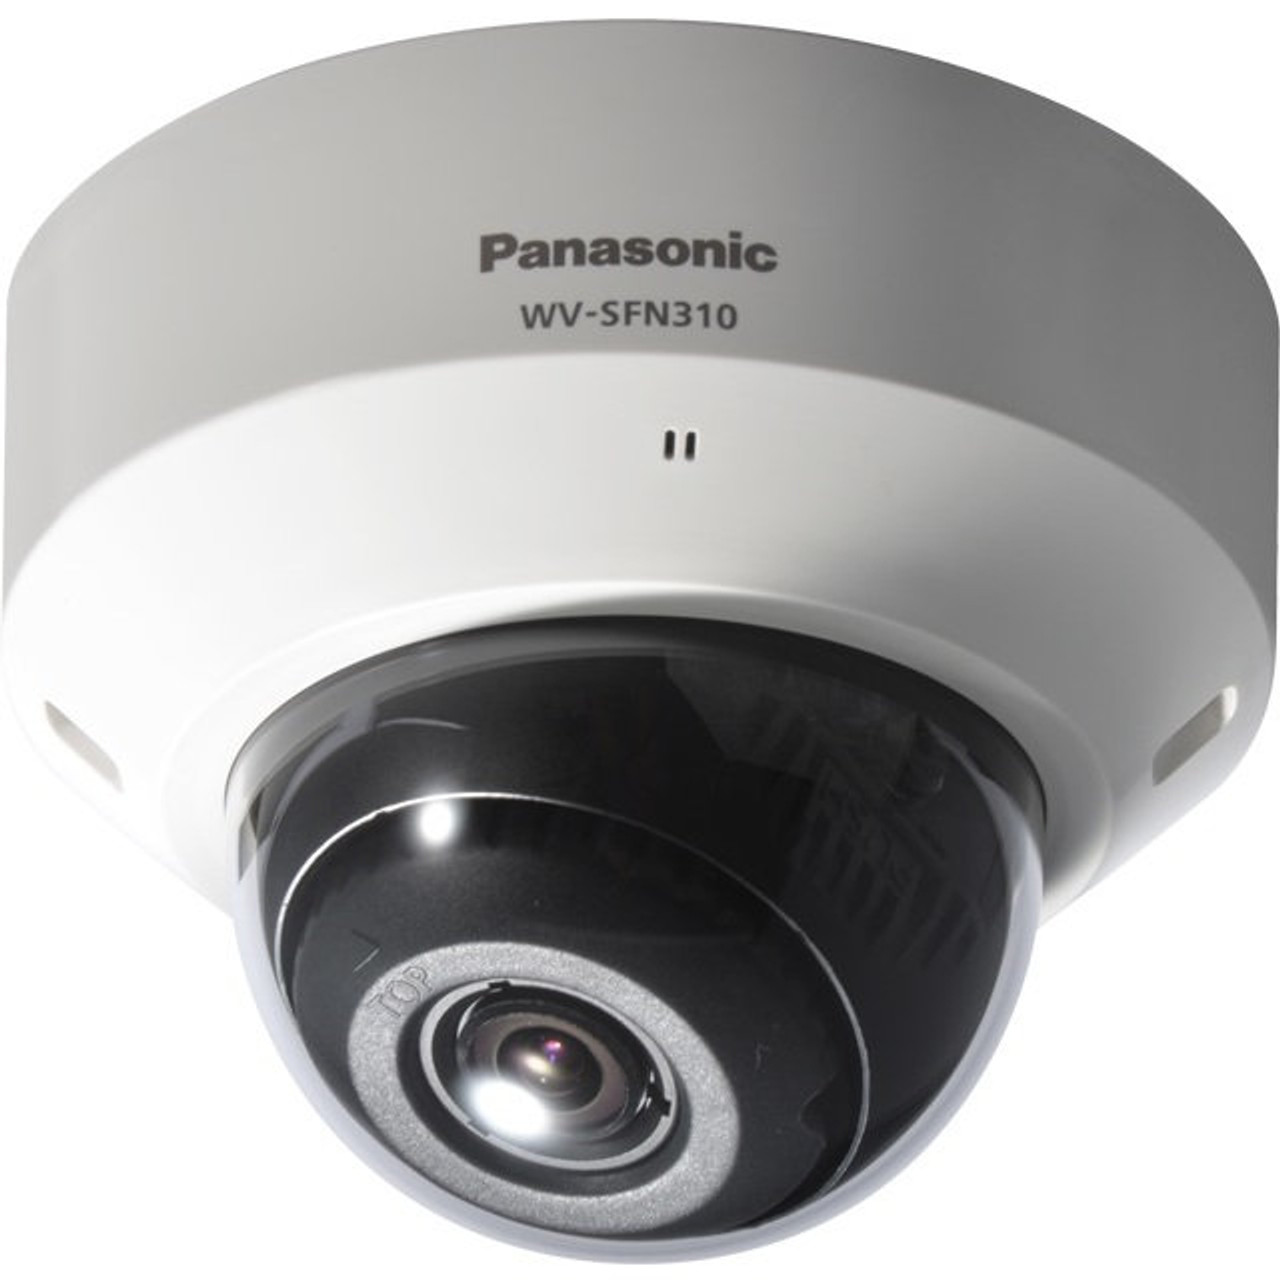 Excentriek Astrolabium twintig Panasonic WV-SFN310 Indoor Dome IP Security Camera